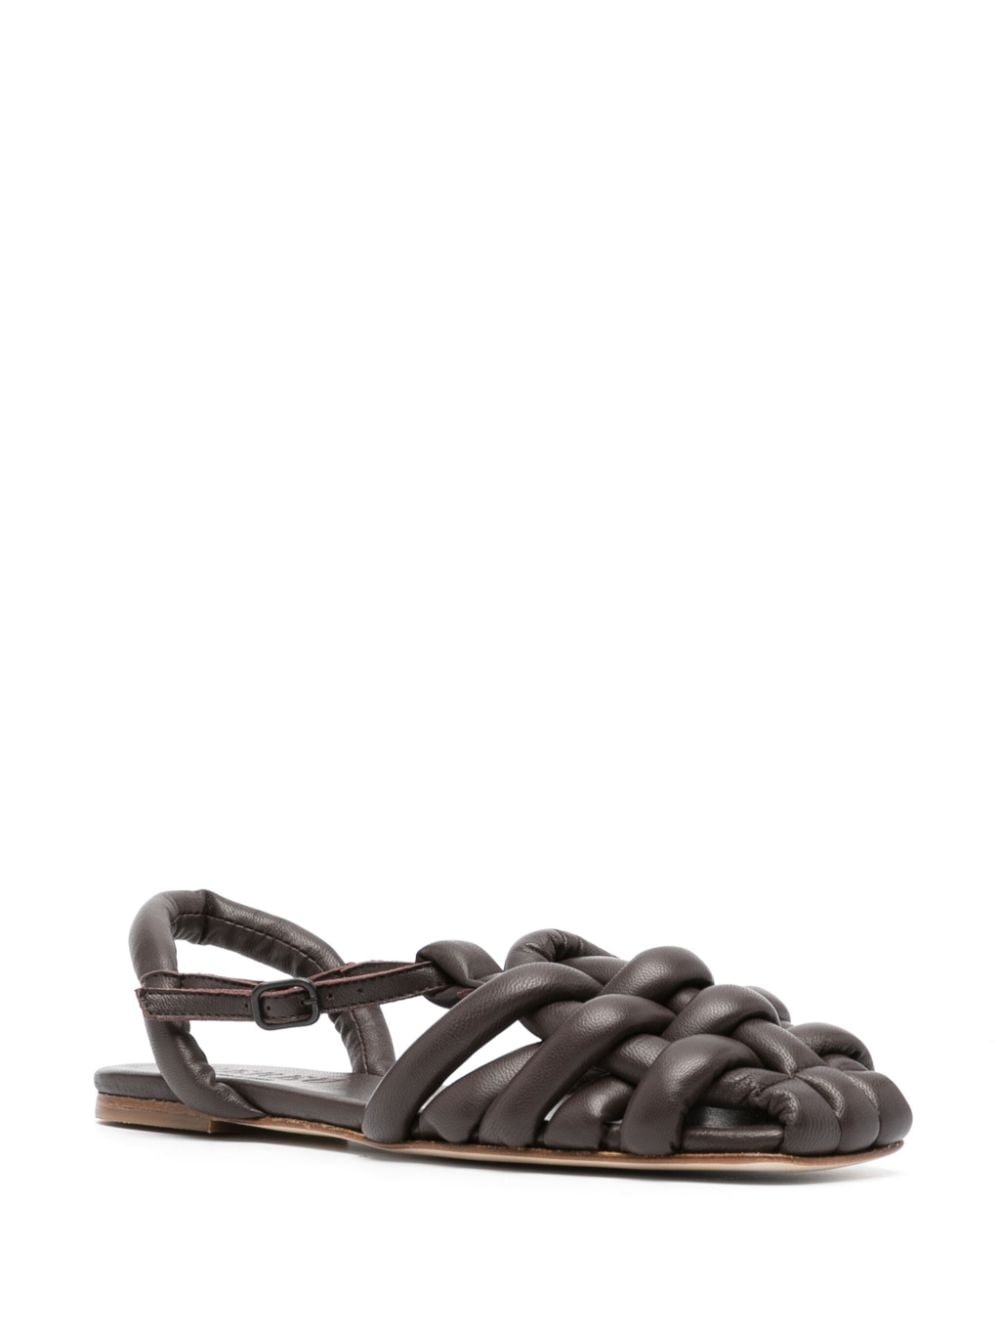 Cabersa pebbled leather sandals - 2